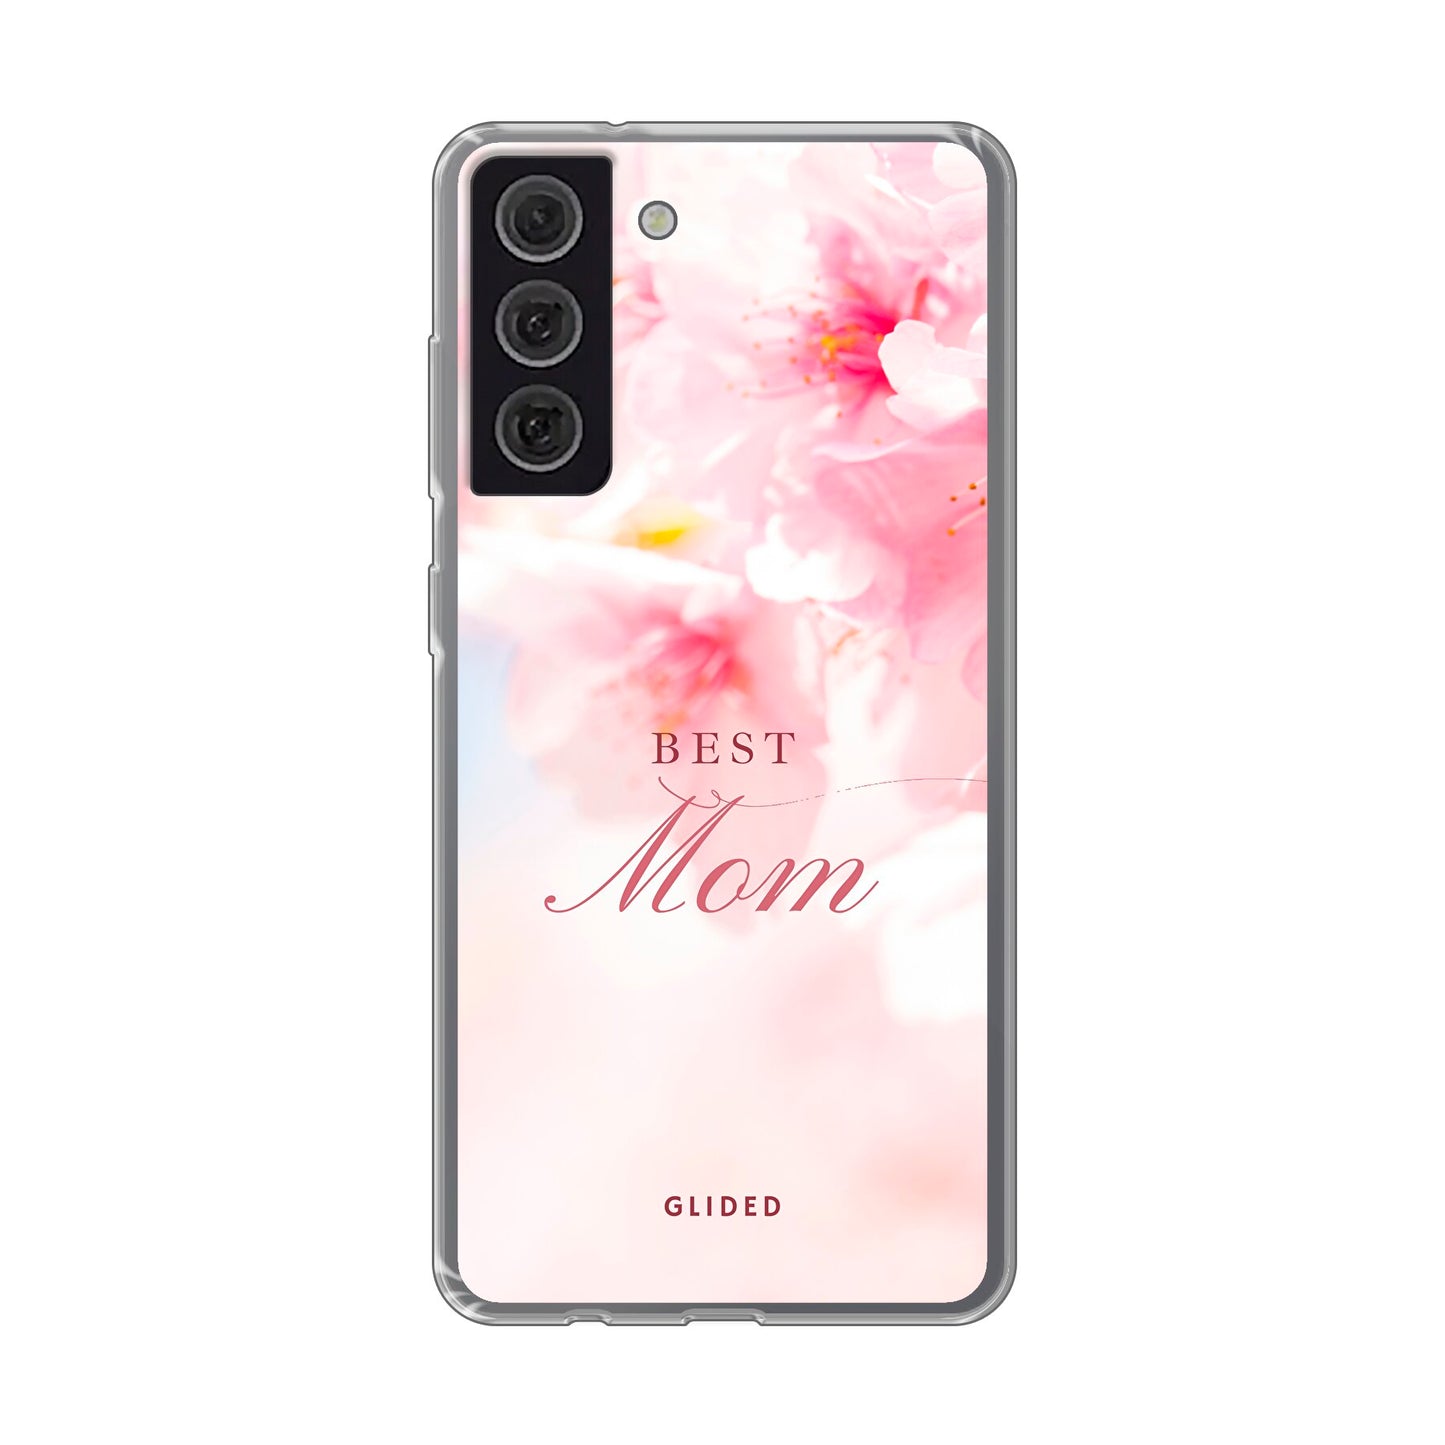 Flower Power - Samsung Galaxy S21 FE - Soft case